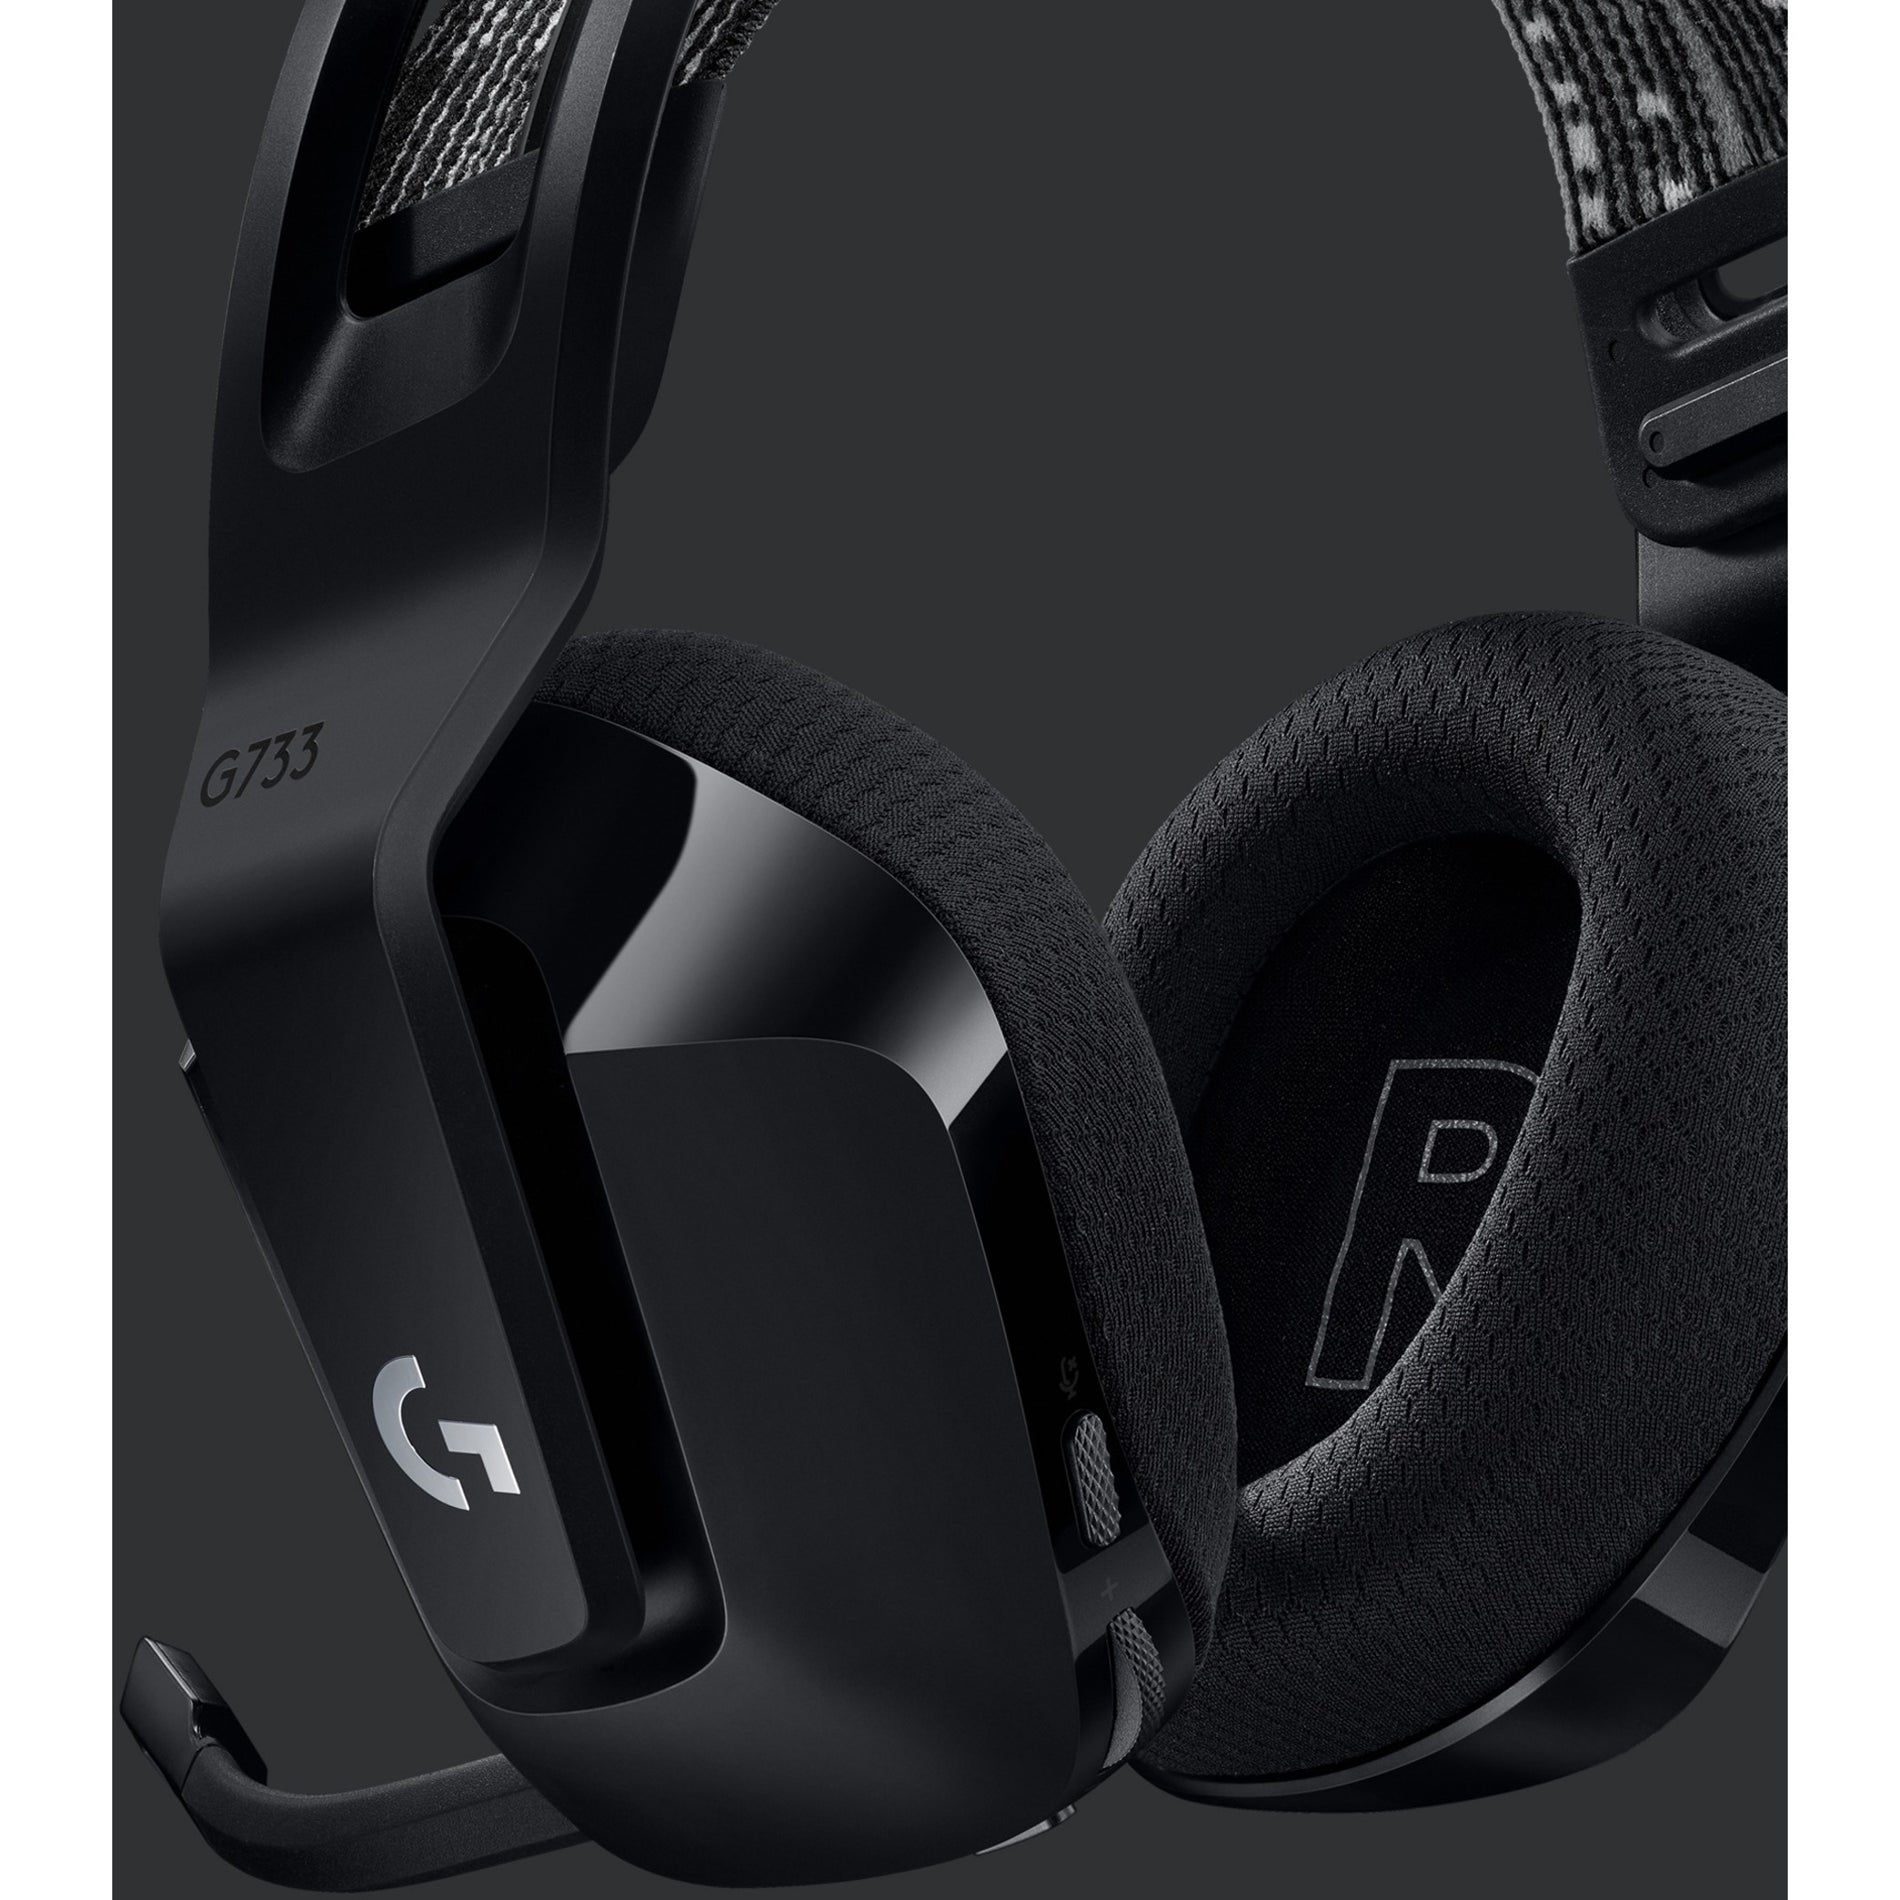 Logitech G733 LIGHTSPEED Wireless Gaming RGB Headset - Replacement  Accessories